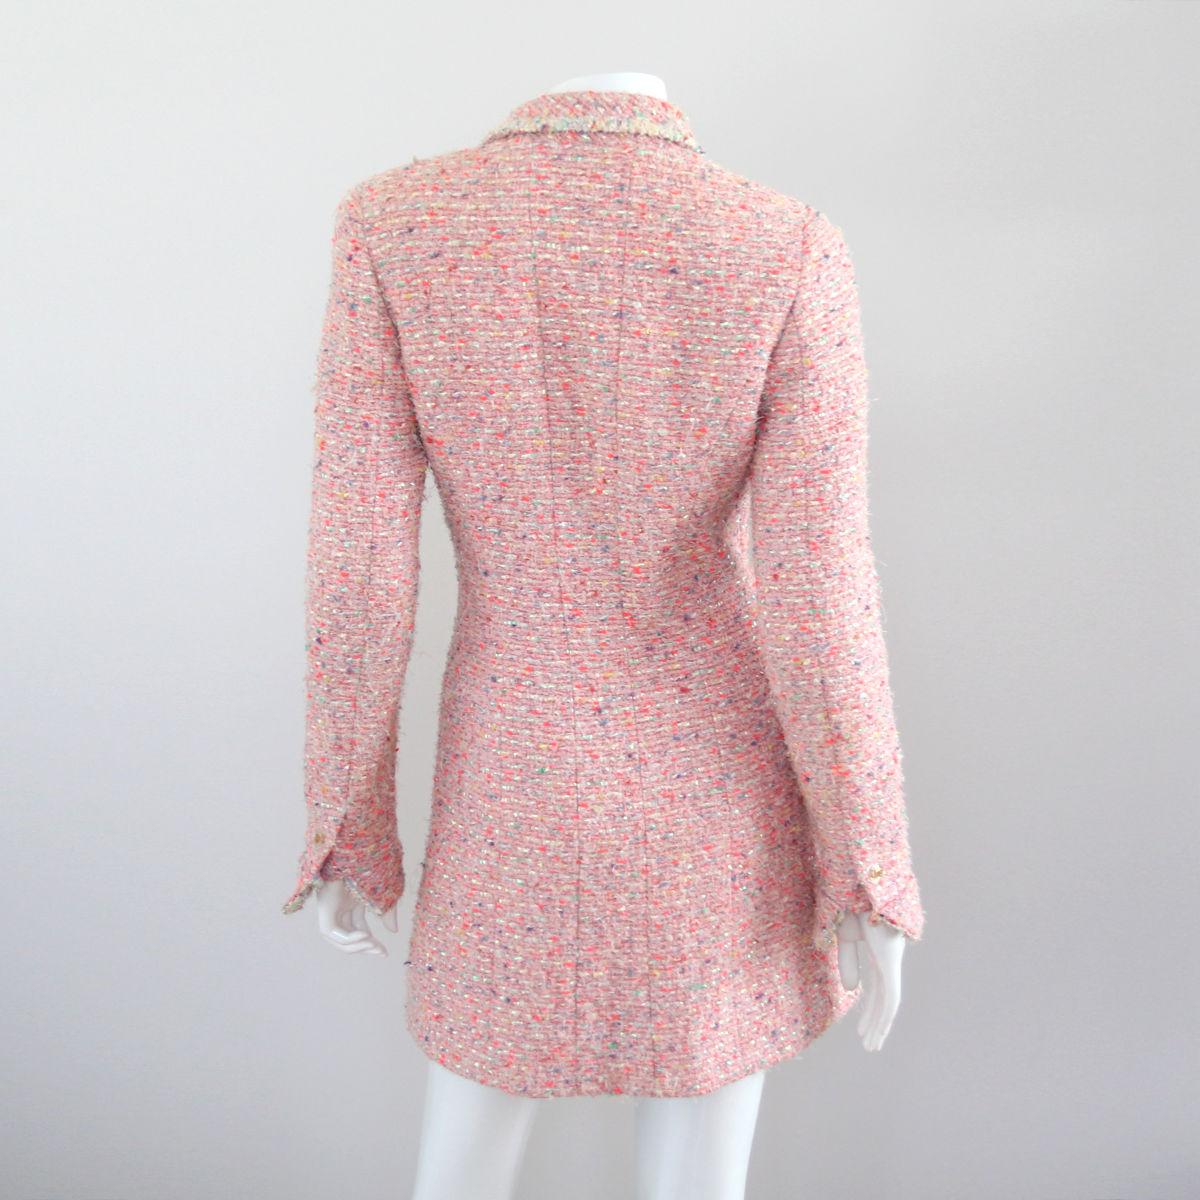 Women's CHANEL 1997 Pink Multicolored Coat / Blazer by Karl Lagerfeld in Tweed Look